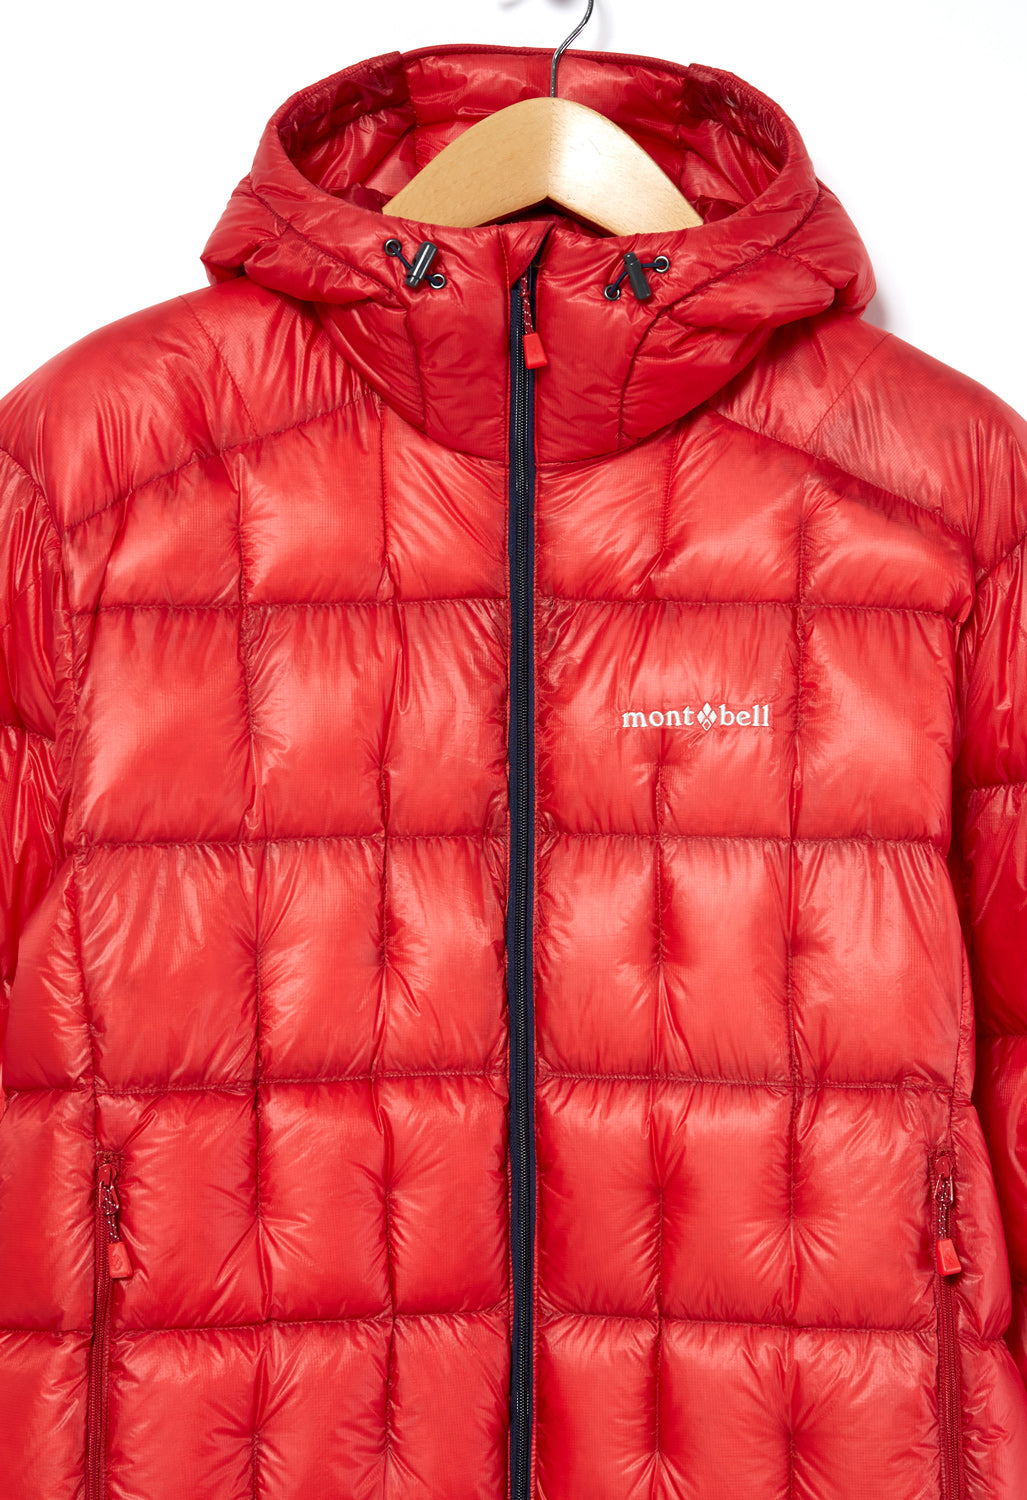 Montbell Men's Plasma 1000 Alpine Down Parka Jacket - Red Brick